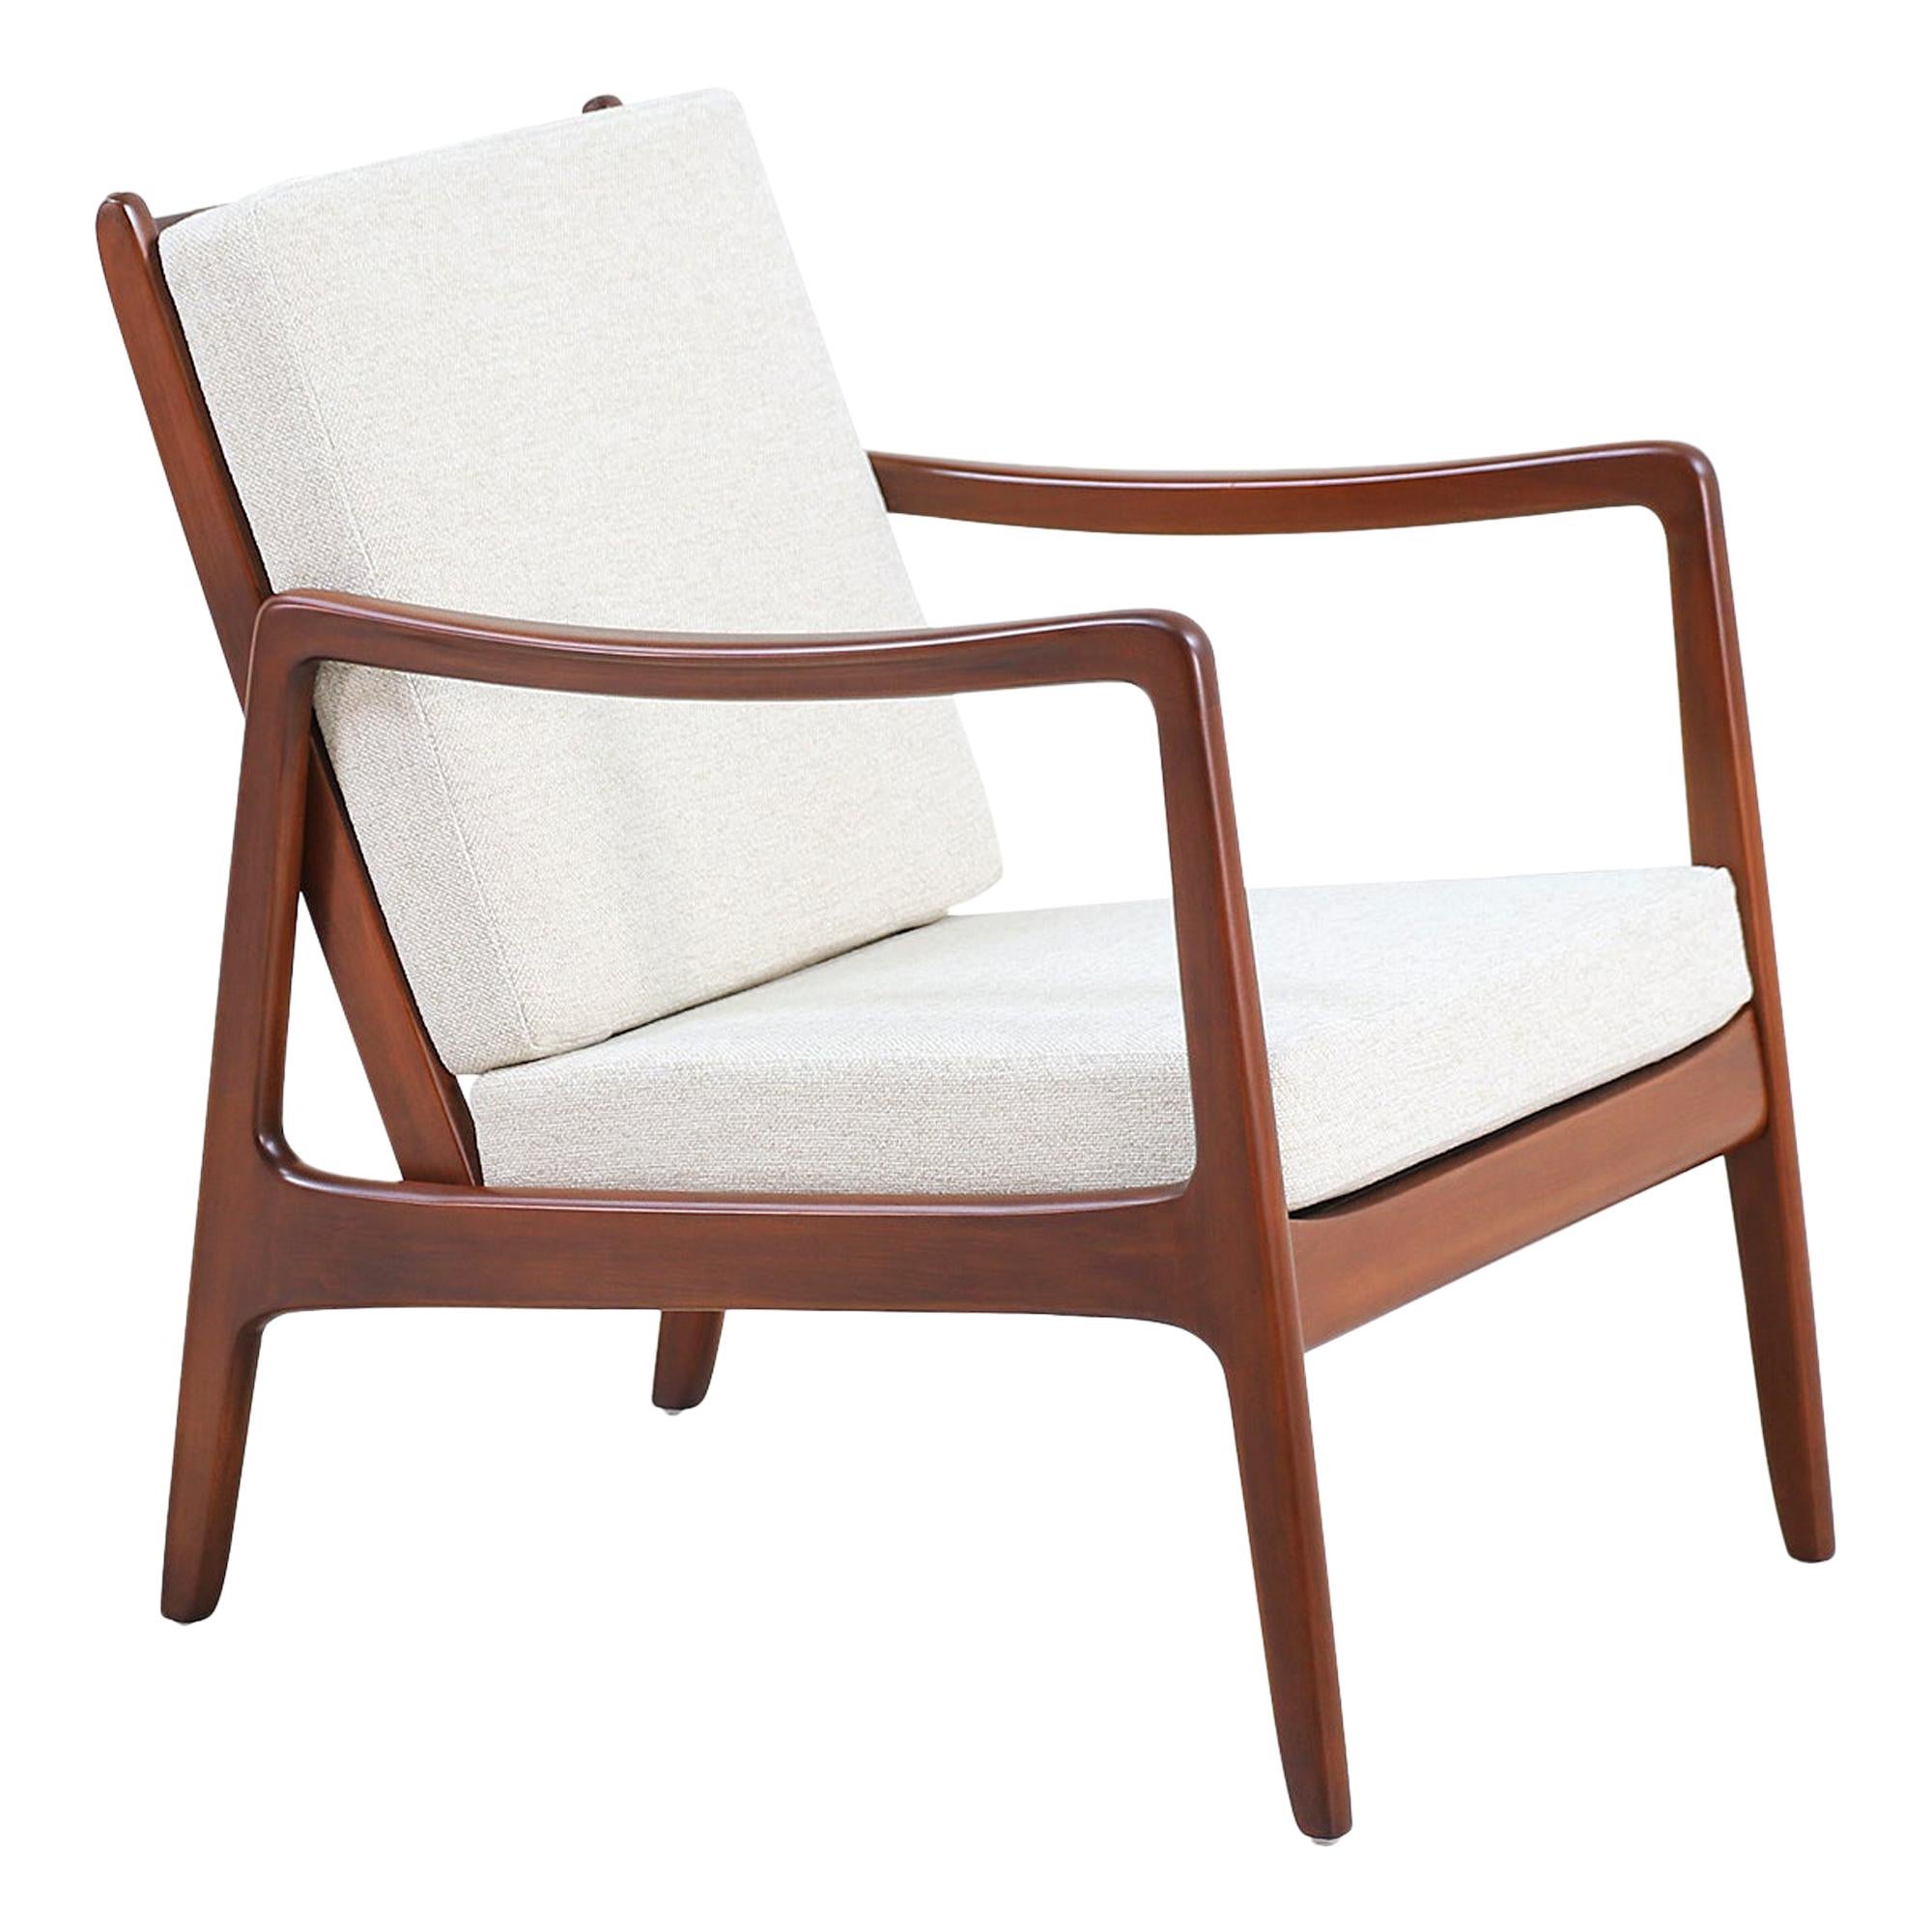 Ole Wanscher Model FD-109 Lounge Chair for France & Søn